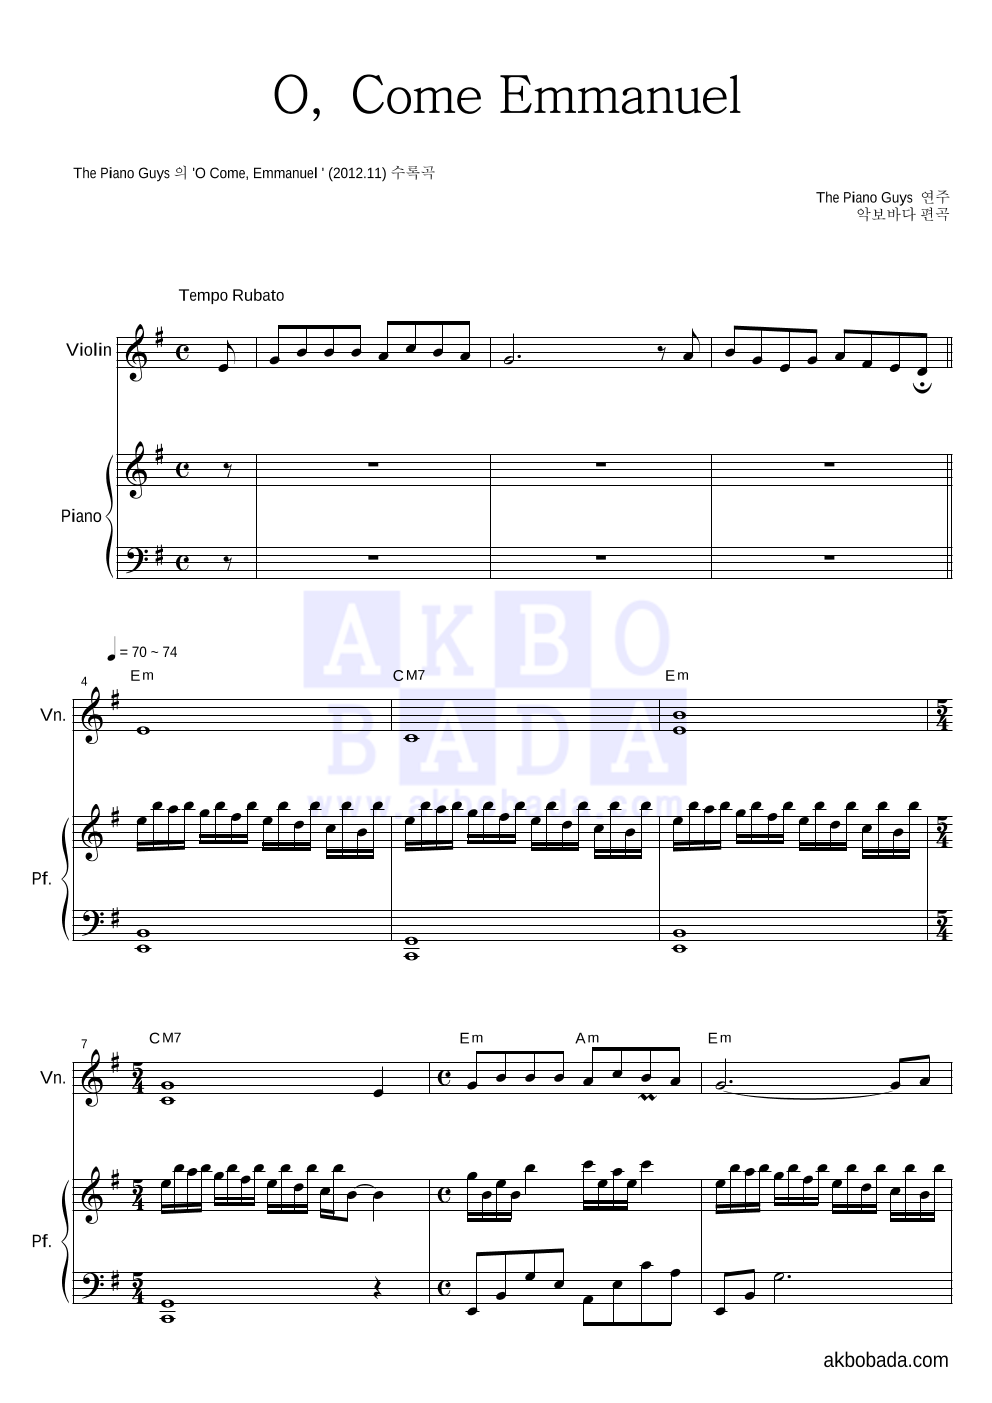 The Piano Guys - O Come, Emmanuel 바이올린&피아노 악보 